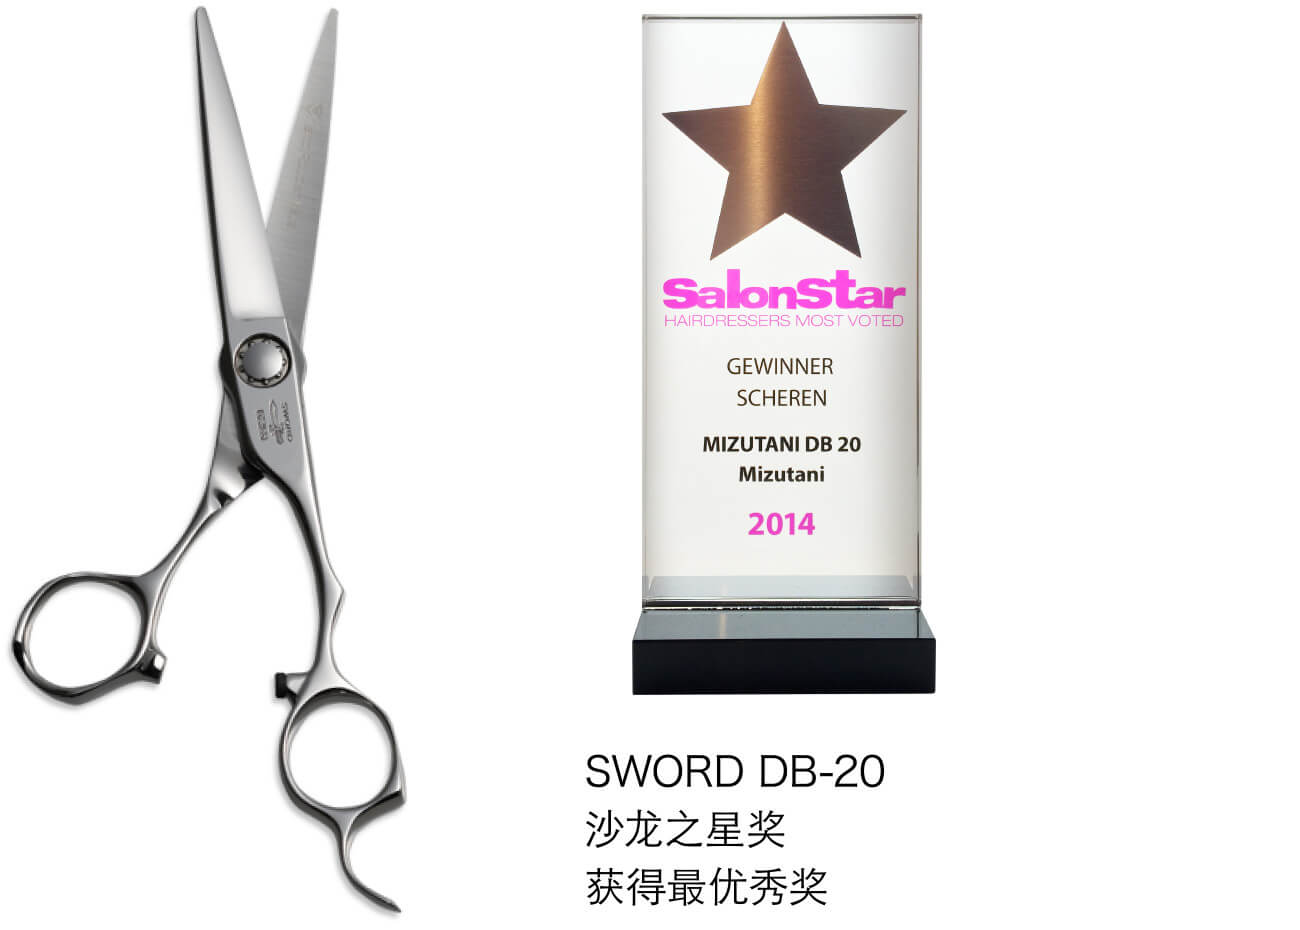 SWORD DB-20 沙龙之星奖 获得最优秀奖